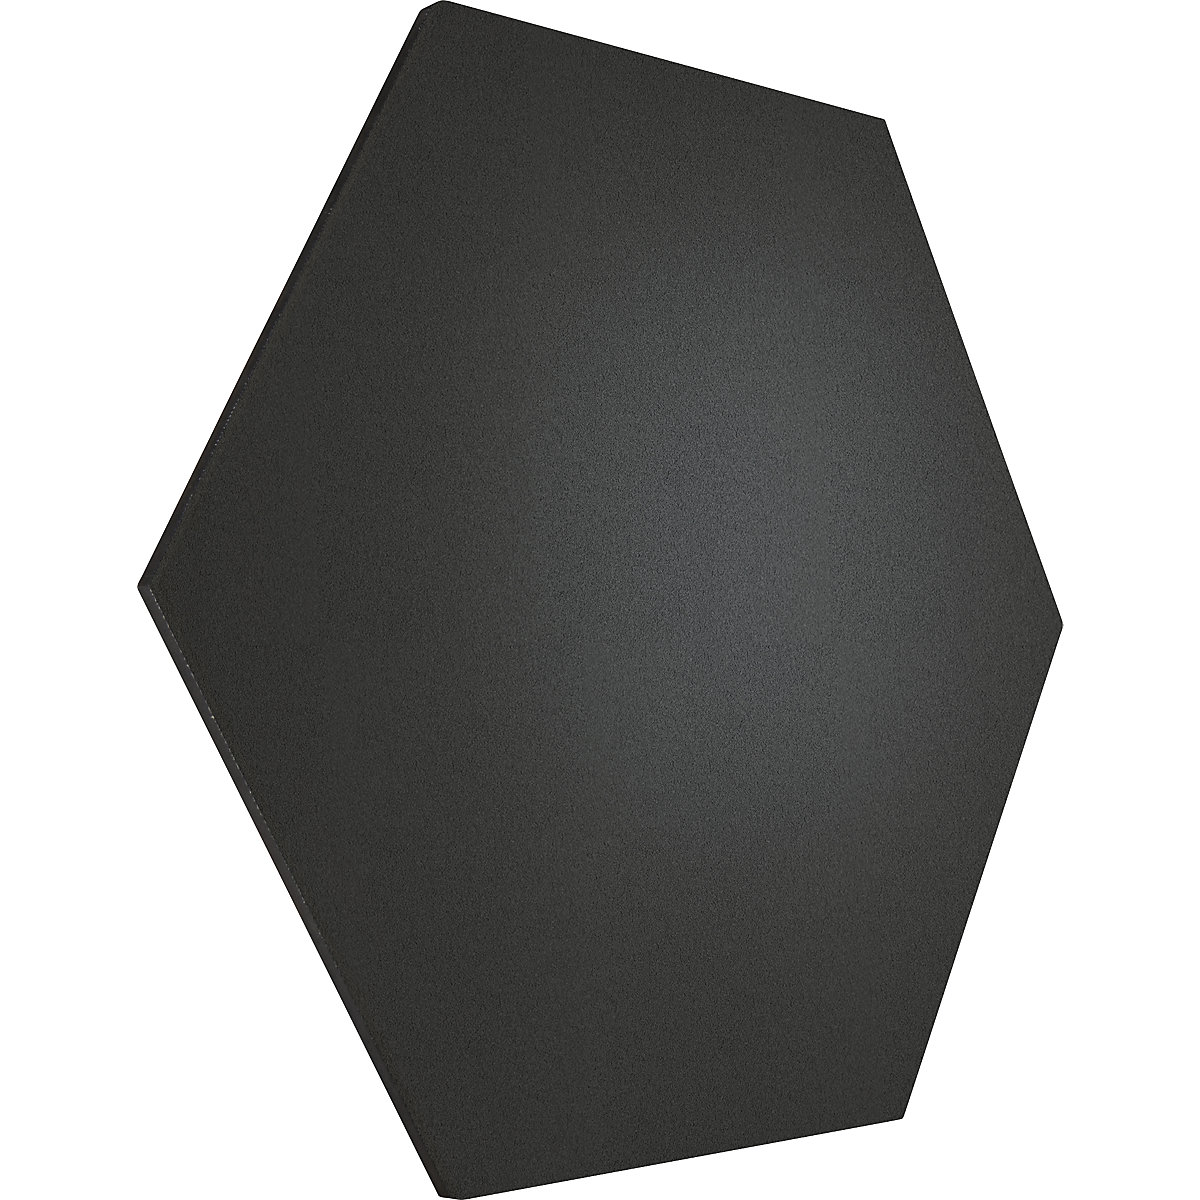 Design prikbord zeshoekig – Chameleon, kurk, b x h = 600 x 600 mm, zwart-31